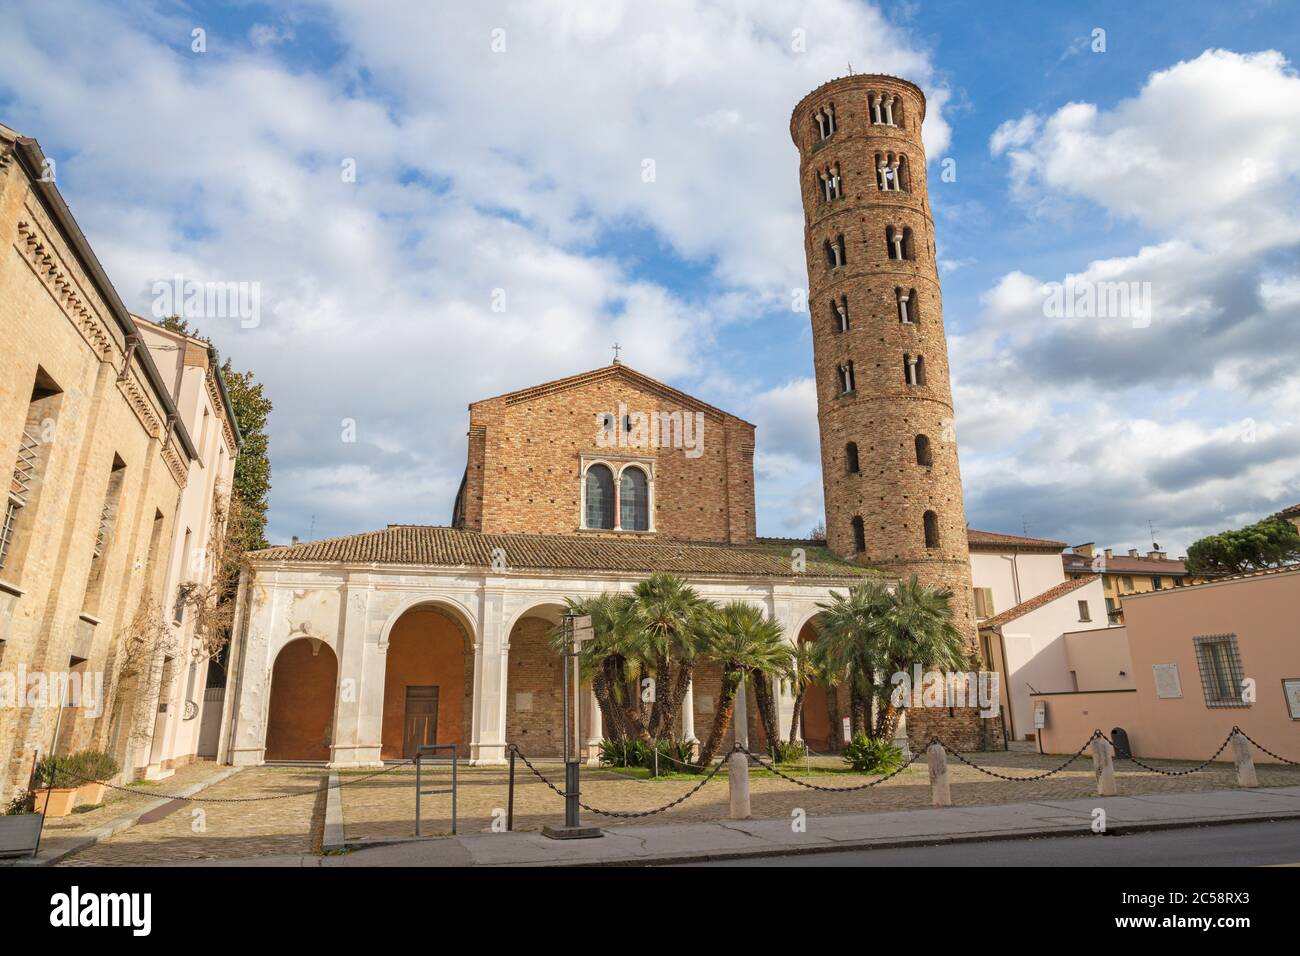 Ravenna - el portal de la iglesia Basílica de Sant Apolinare Nuovo. Foto de stock